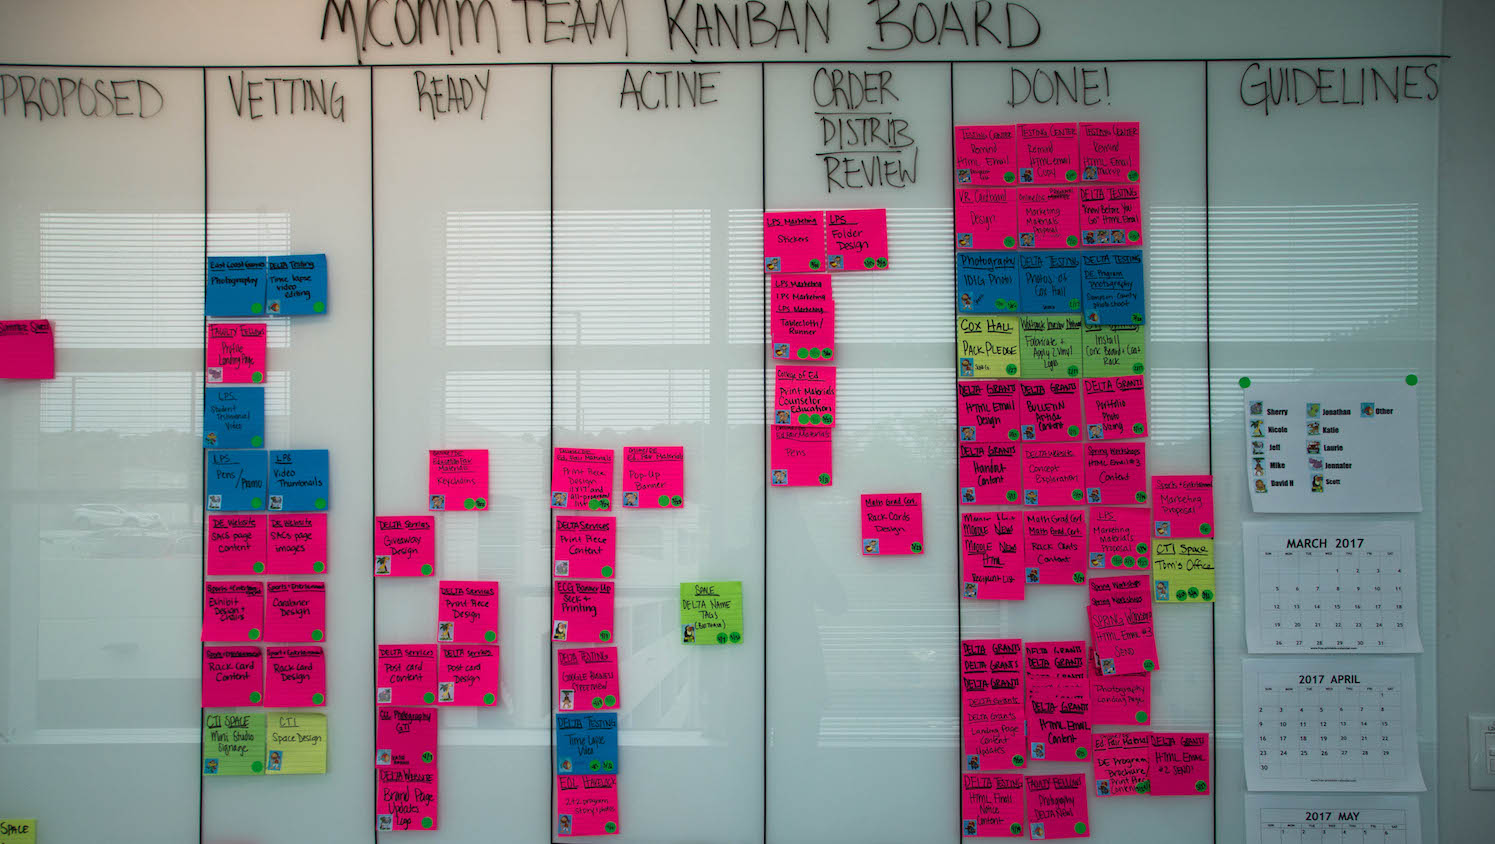 The M/Comm Team Kanban Board. Photo by Sarah Banko